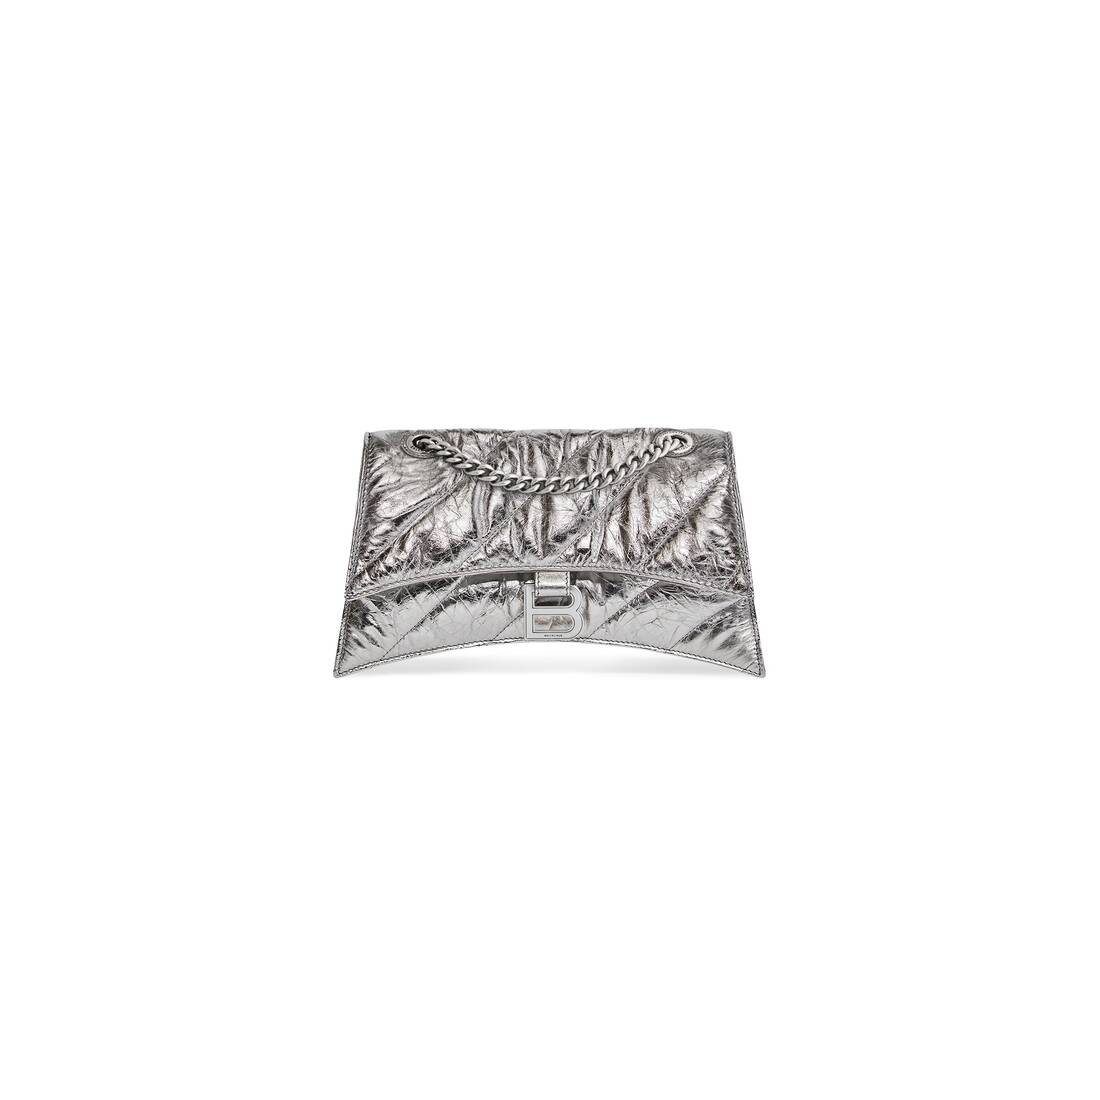 Leder Clutch mini - silber metallic - Archive SALE